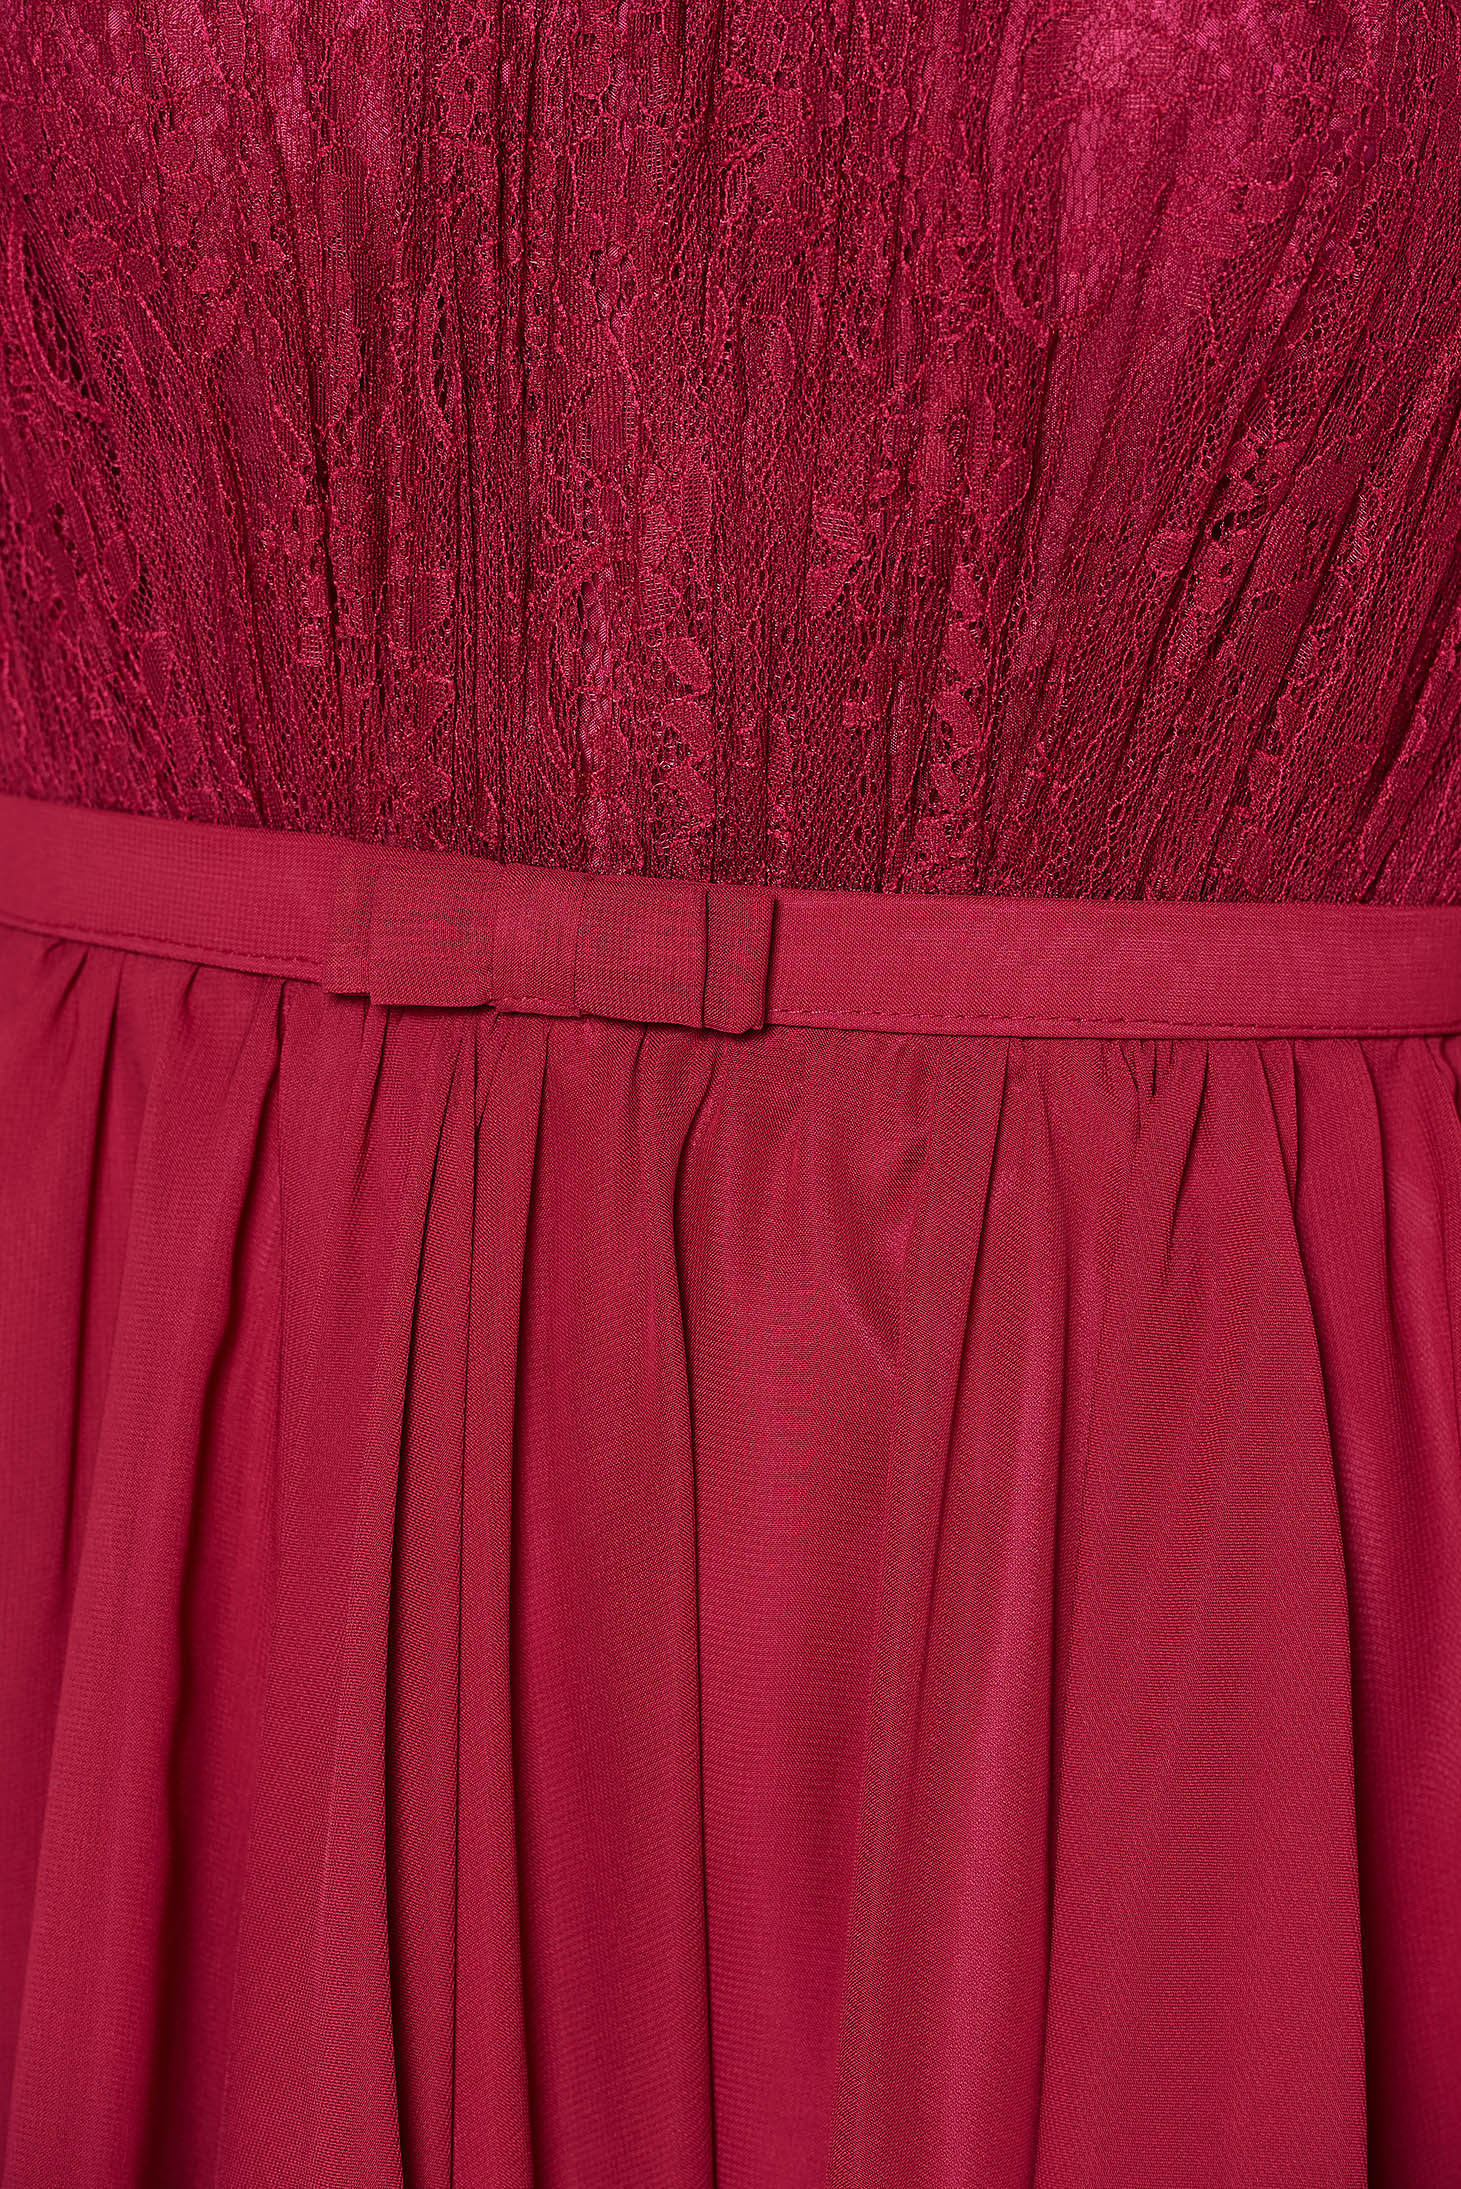 - Ana Radu burgundy dress from laced fabric voile fabric short cut cloche